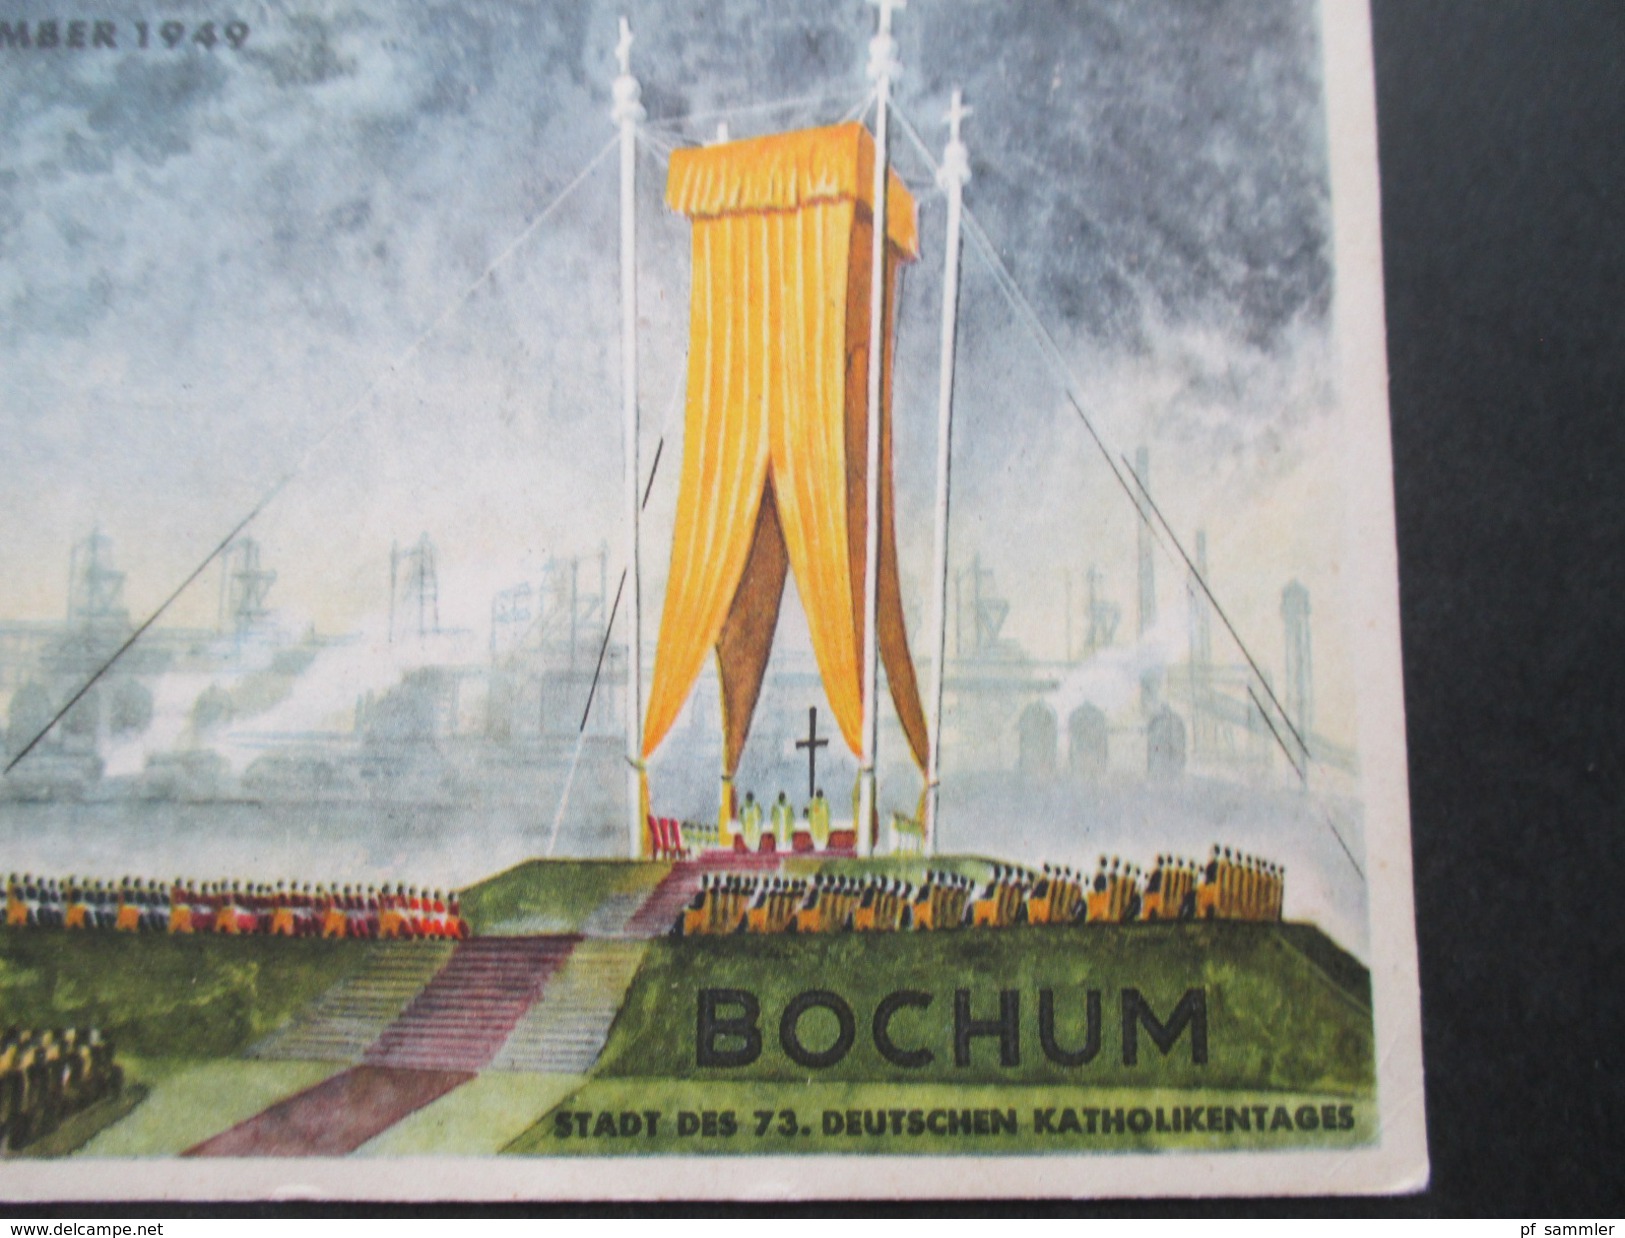 AK / Künstlerkarte Bochum Stadt Des 73. Deutschen Katholikentages. 1. - 4. September. 1949 Aquarell Kurt Hubert Vieth. - Christentum